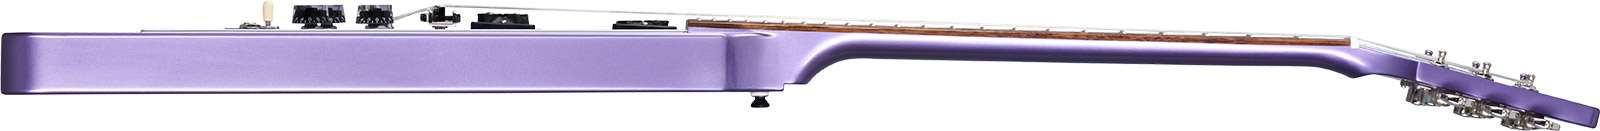 Epiphone Kirk Hammett Flying V 1979 Signature 2h Gibson  Ht Rw - Purple Metallic - Signature electric guitar - Variation 2